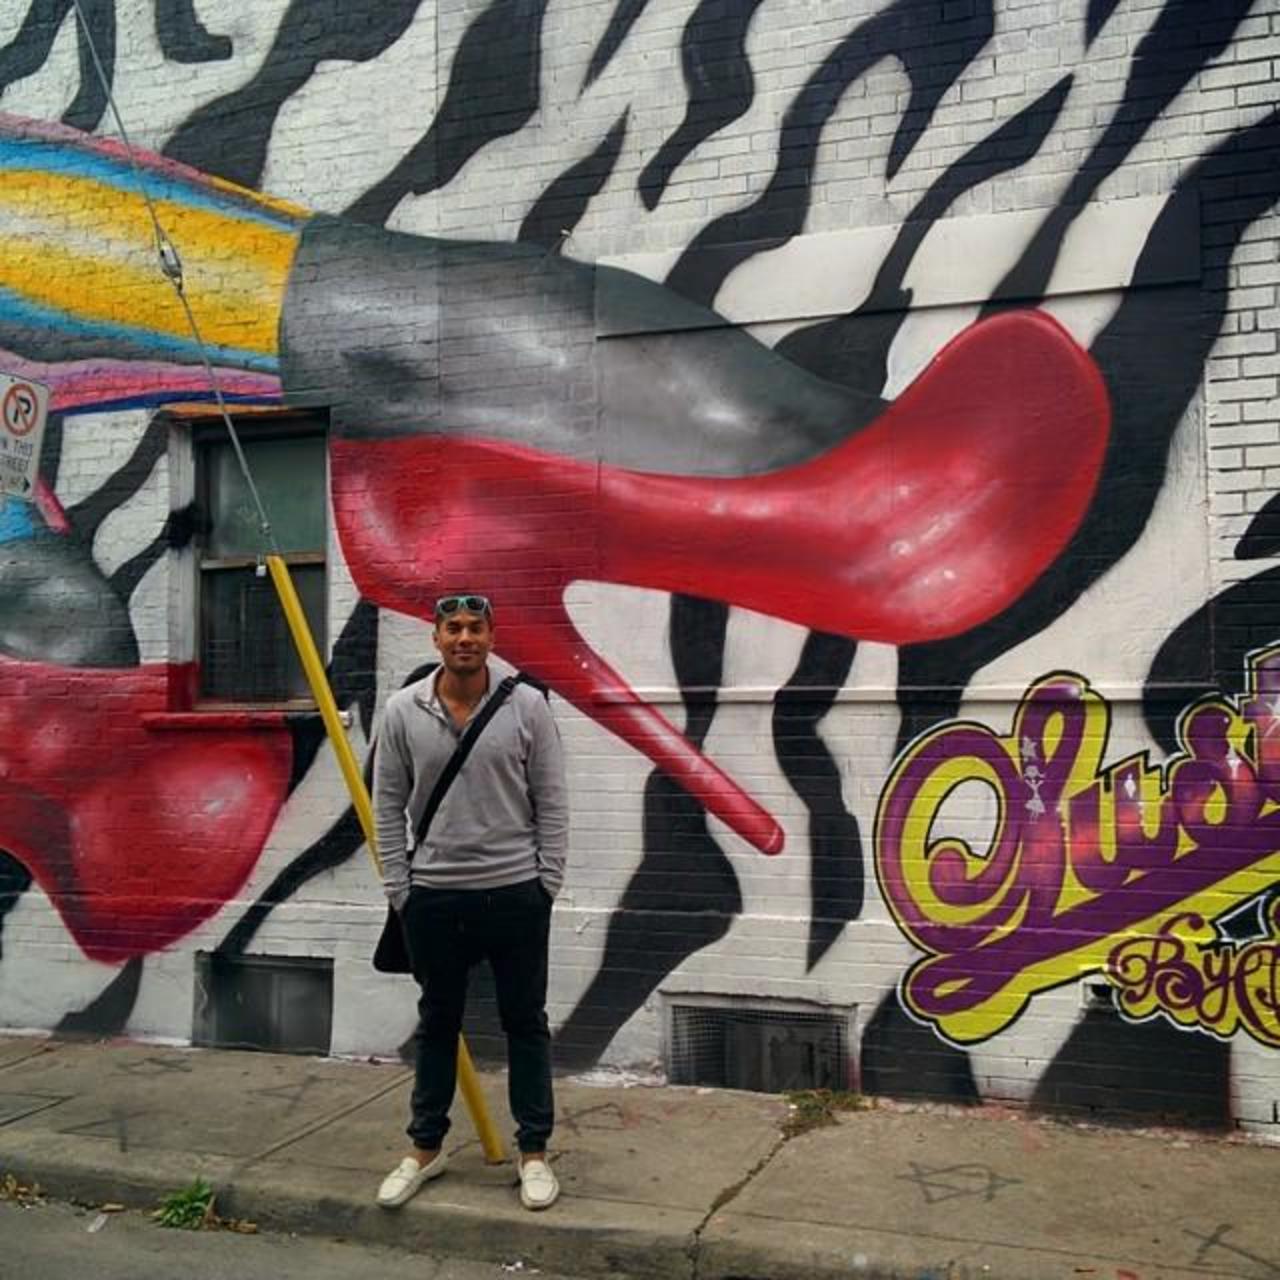 #christianlouboutin #kicks and #zebras.. #toronto #wallart #graffiti #graffitialley #spraypaint #art #painting #a... http://t.co/46zUbLEElX